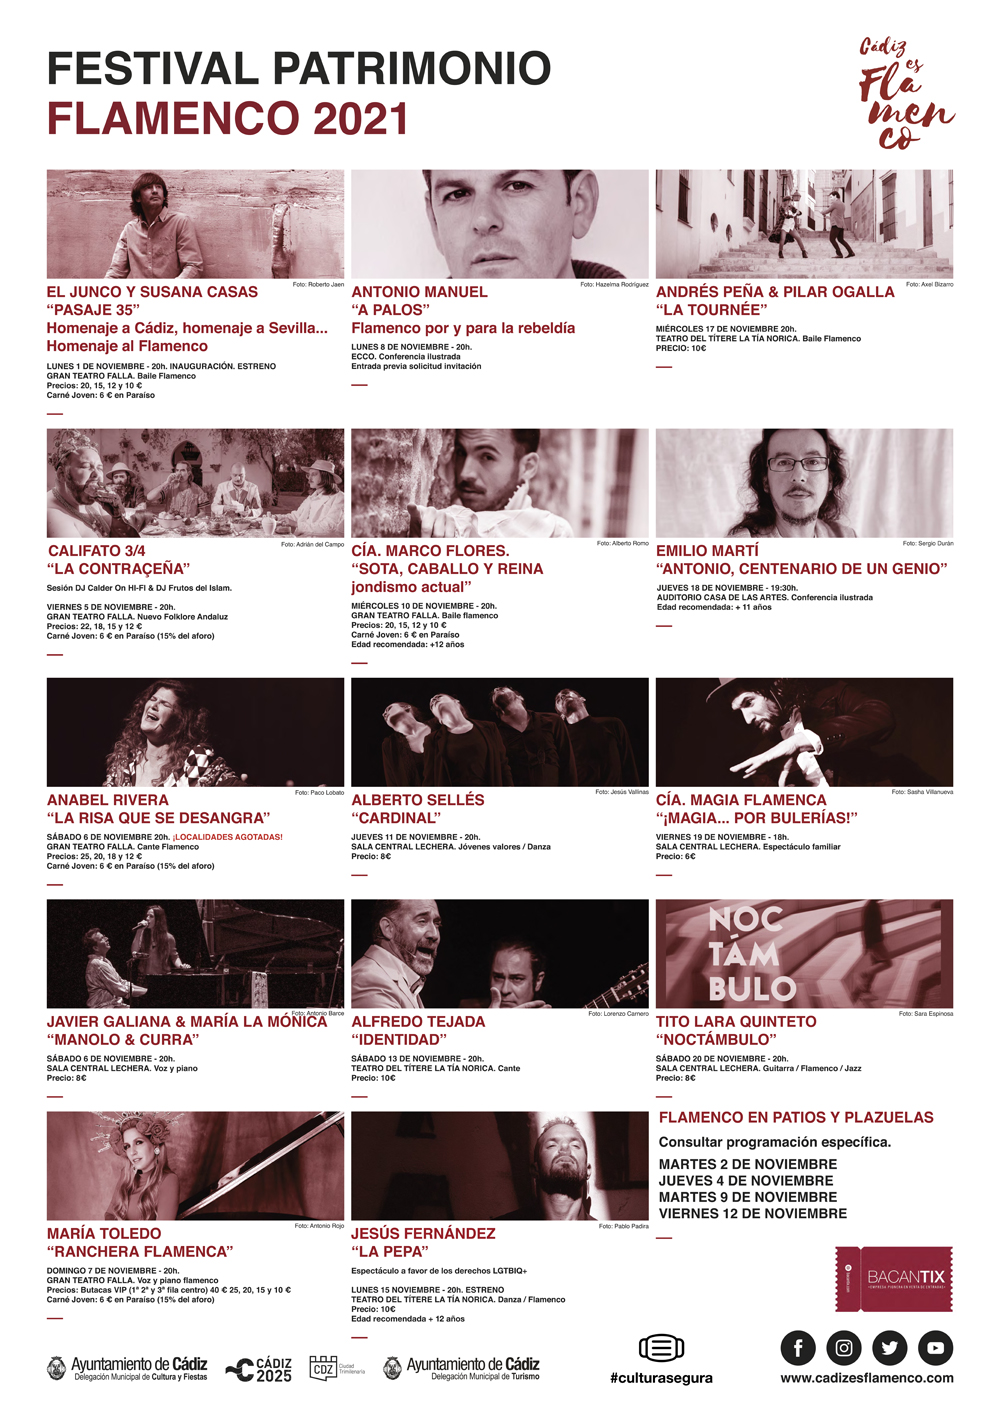 sites/default/files/2021/agenda/flamenco/festival_patrimonio_flamenco.jpg